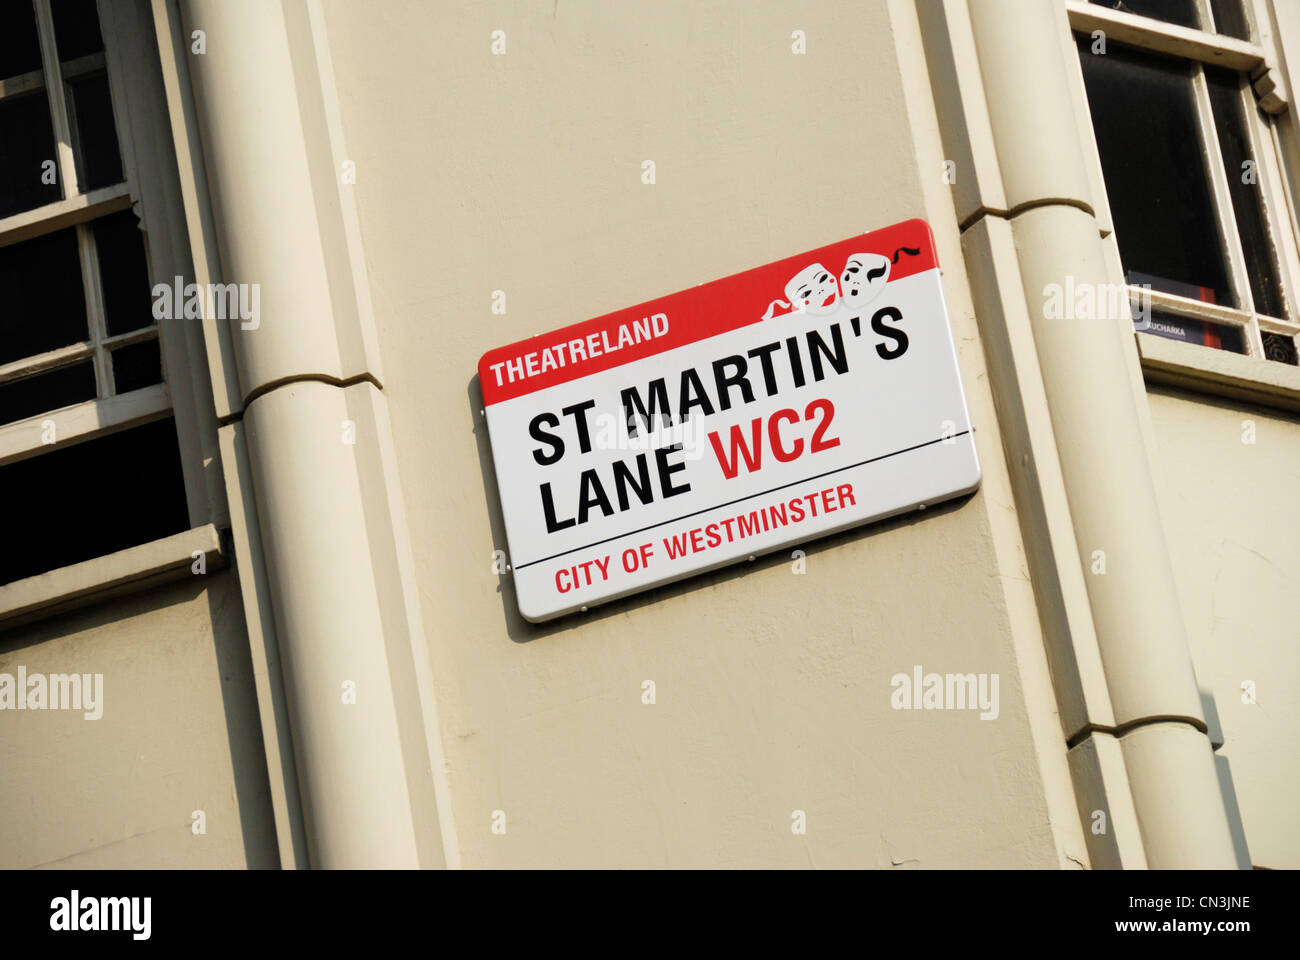 St Martin’s Lane WC2 City of Westminster street sign, London, UK Stock Photo